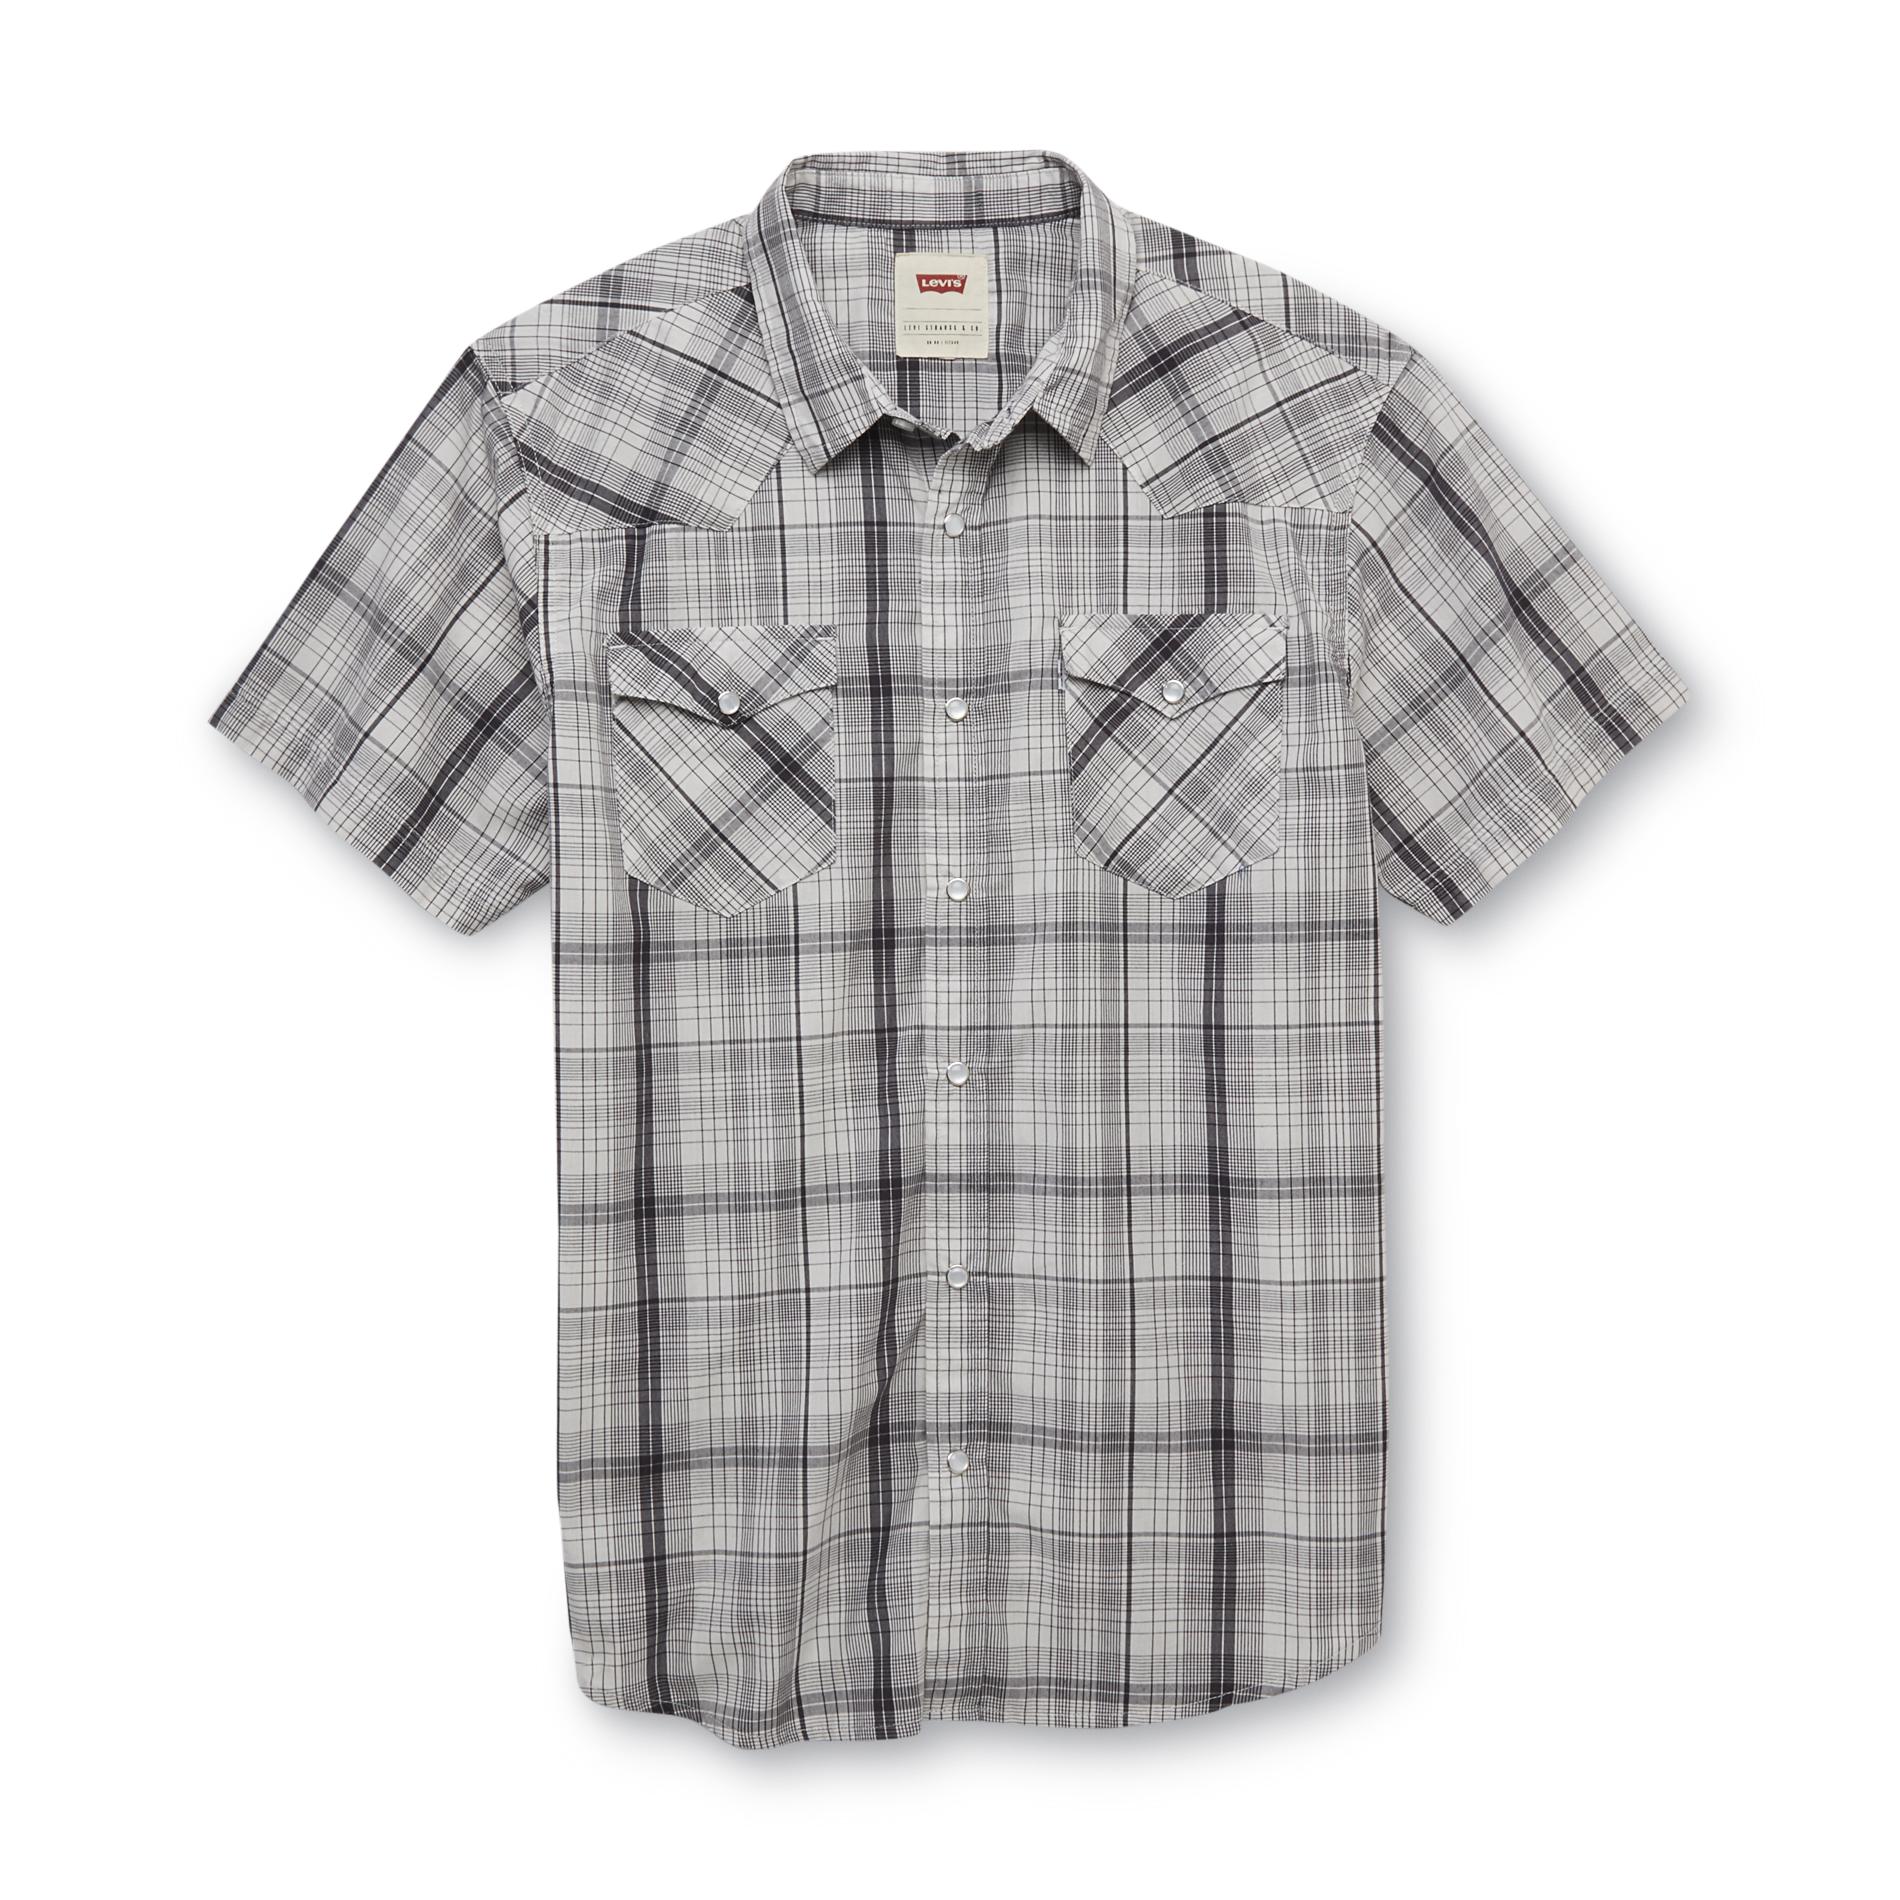 Levi's Men's Short-Sleeve Woven Shirt - Plaid